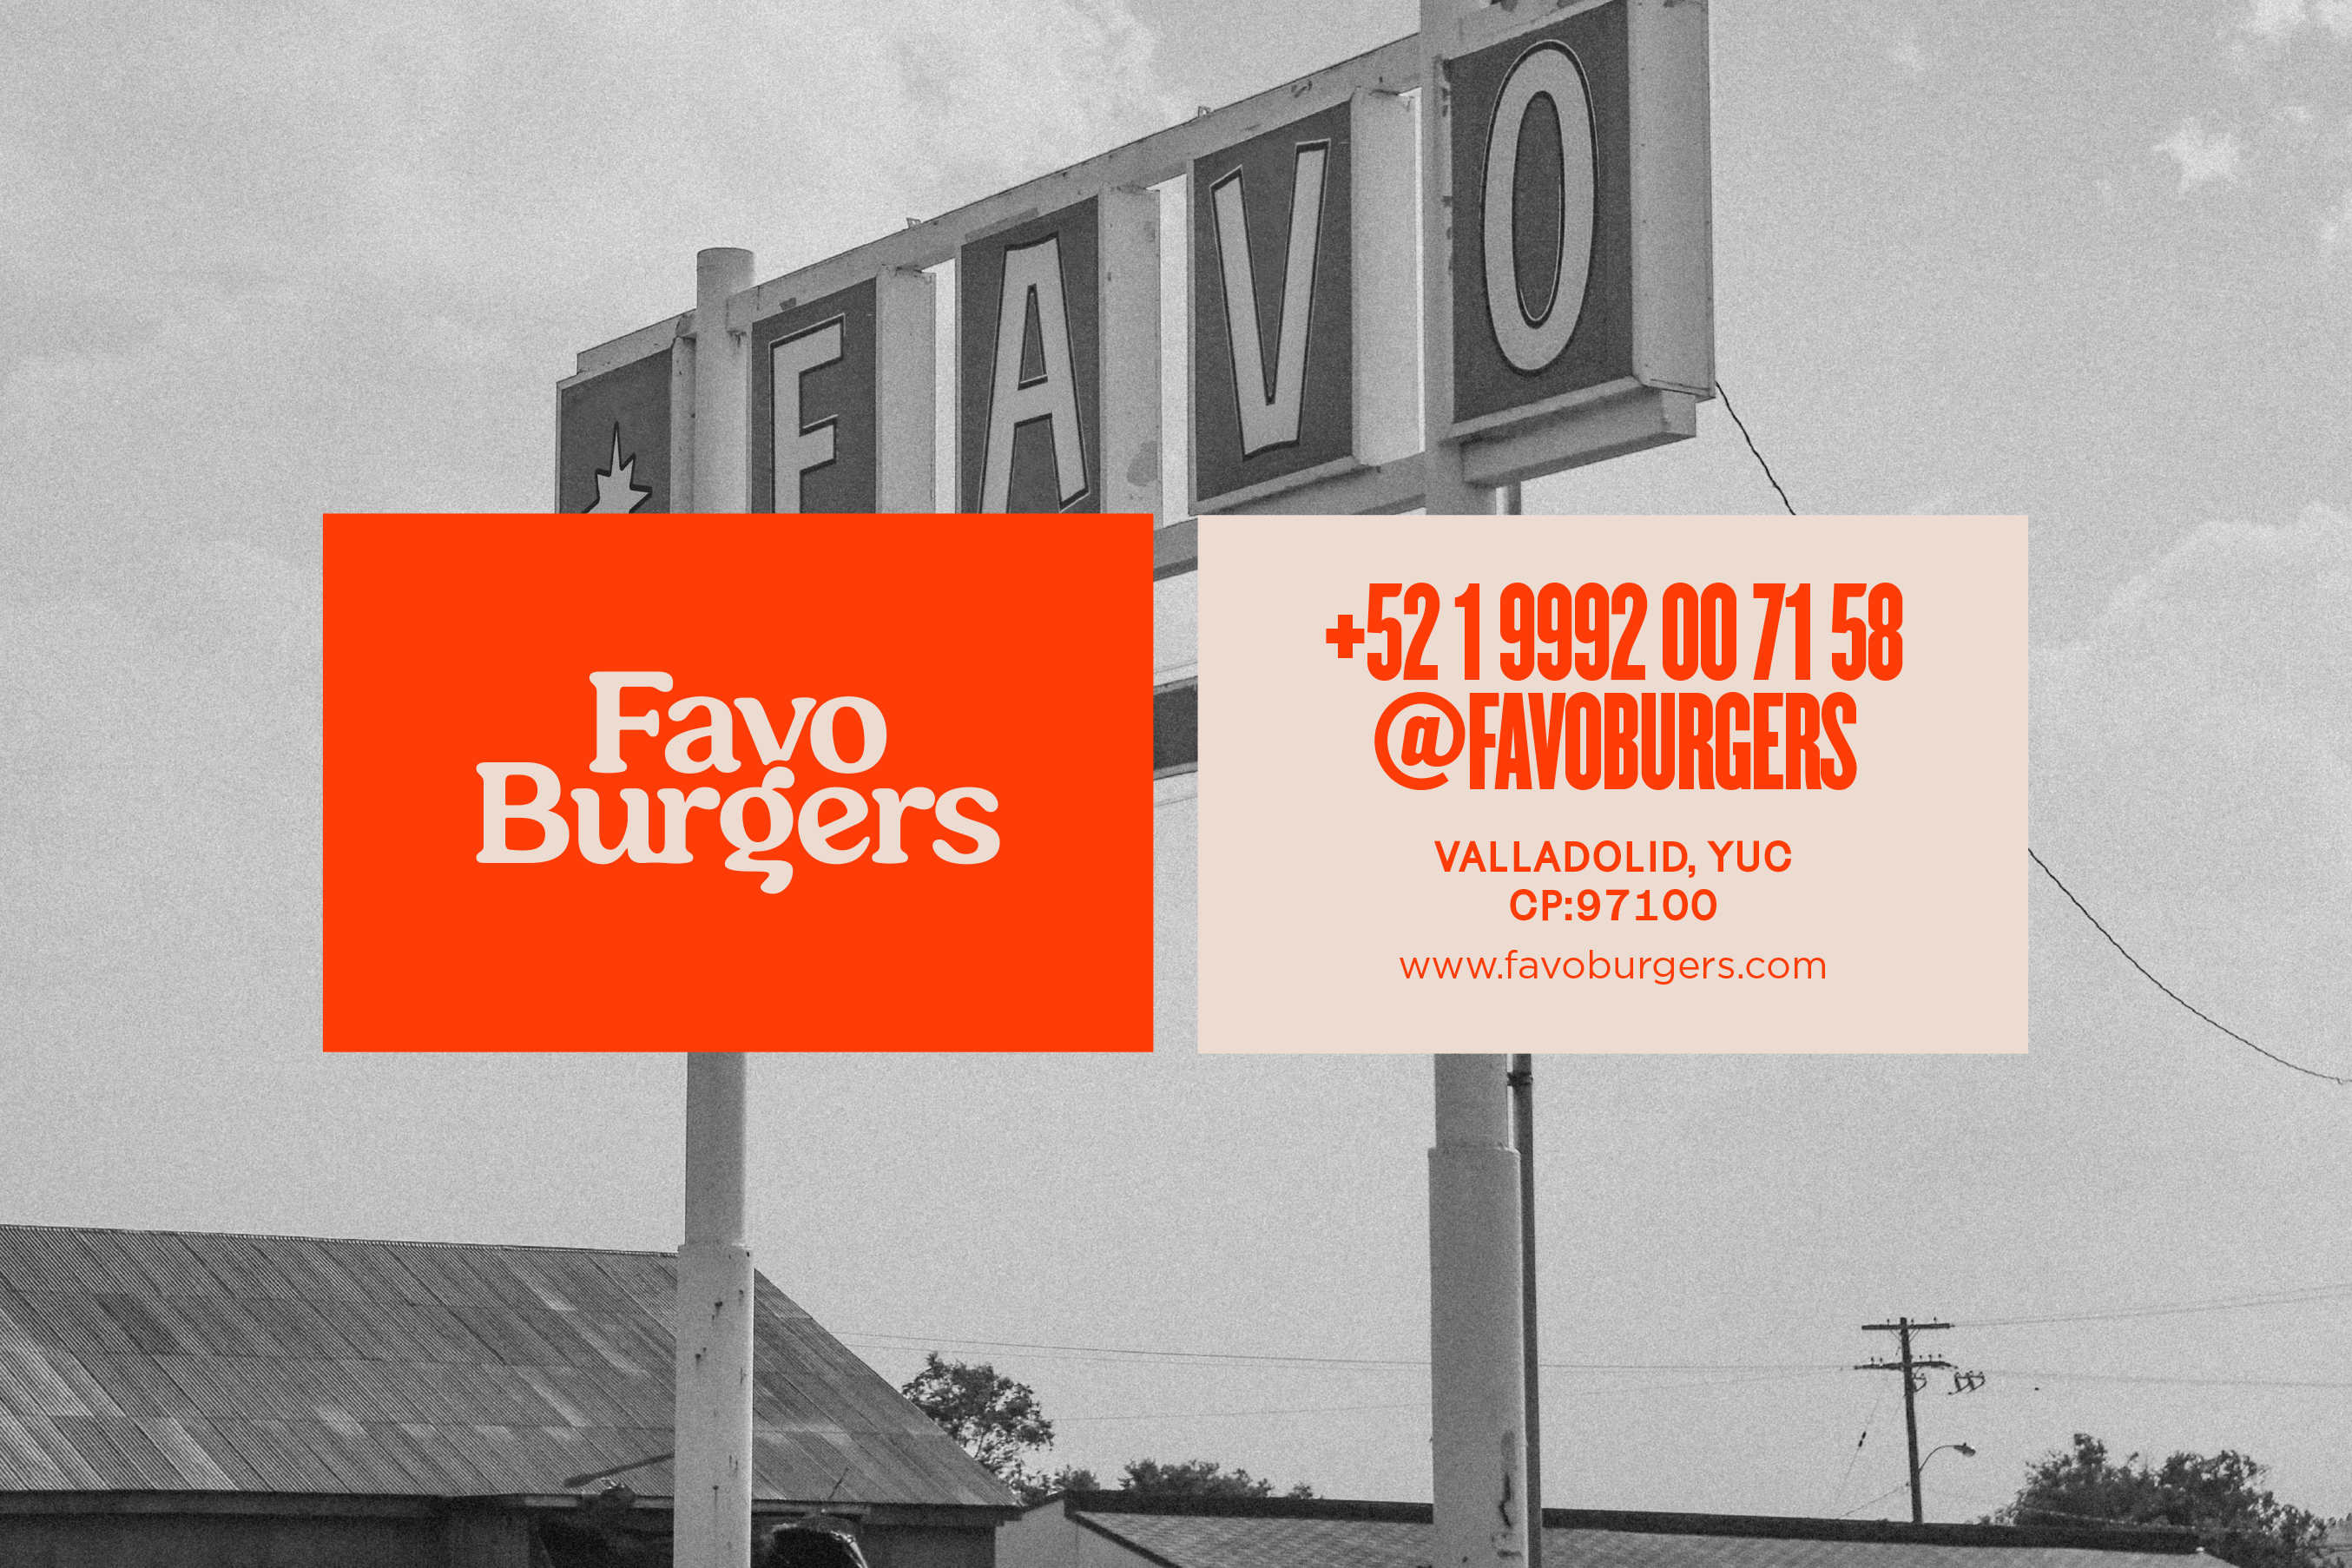 Favo Burgers restaurant branding by Puro Diseno